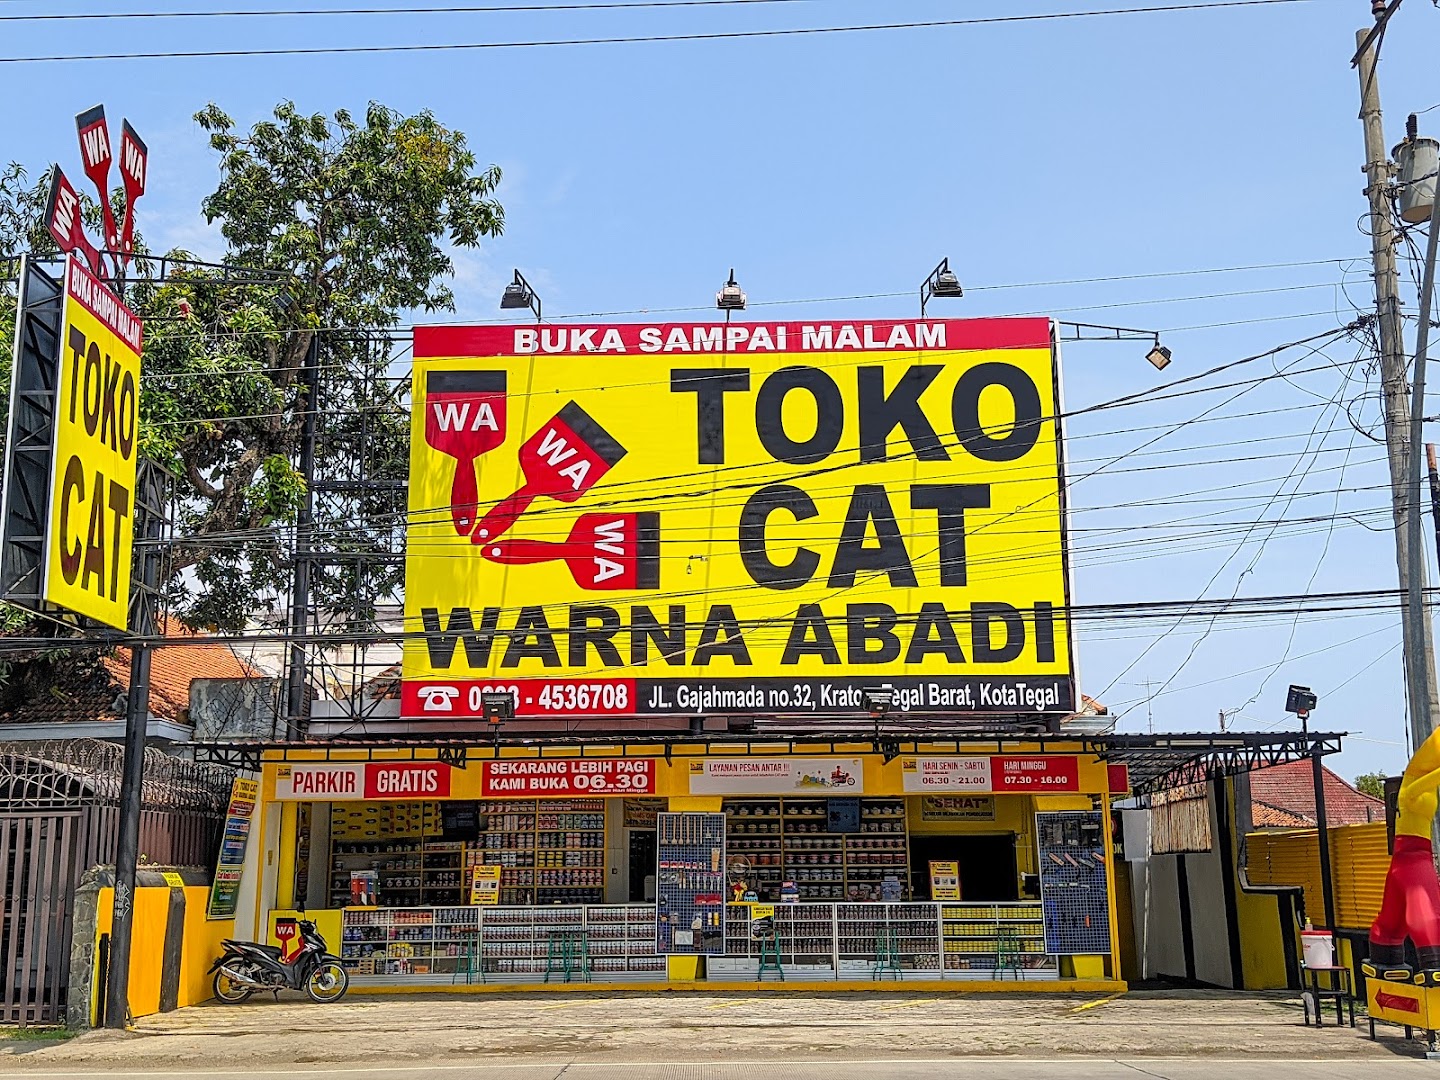 Toko Cat Warna Abadi Tegal Photo